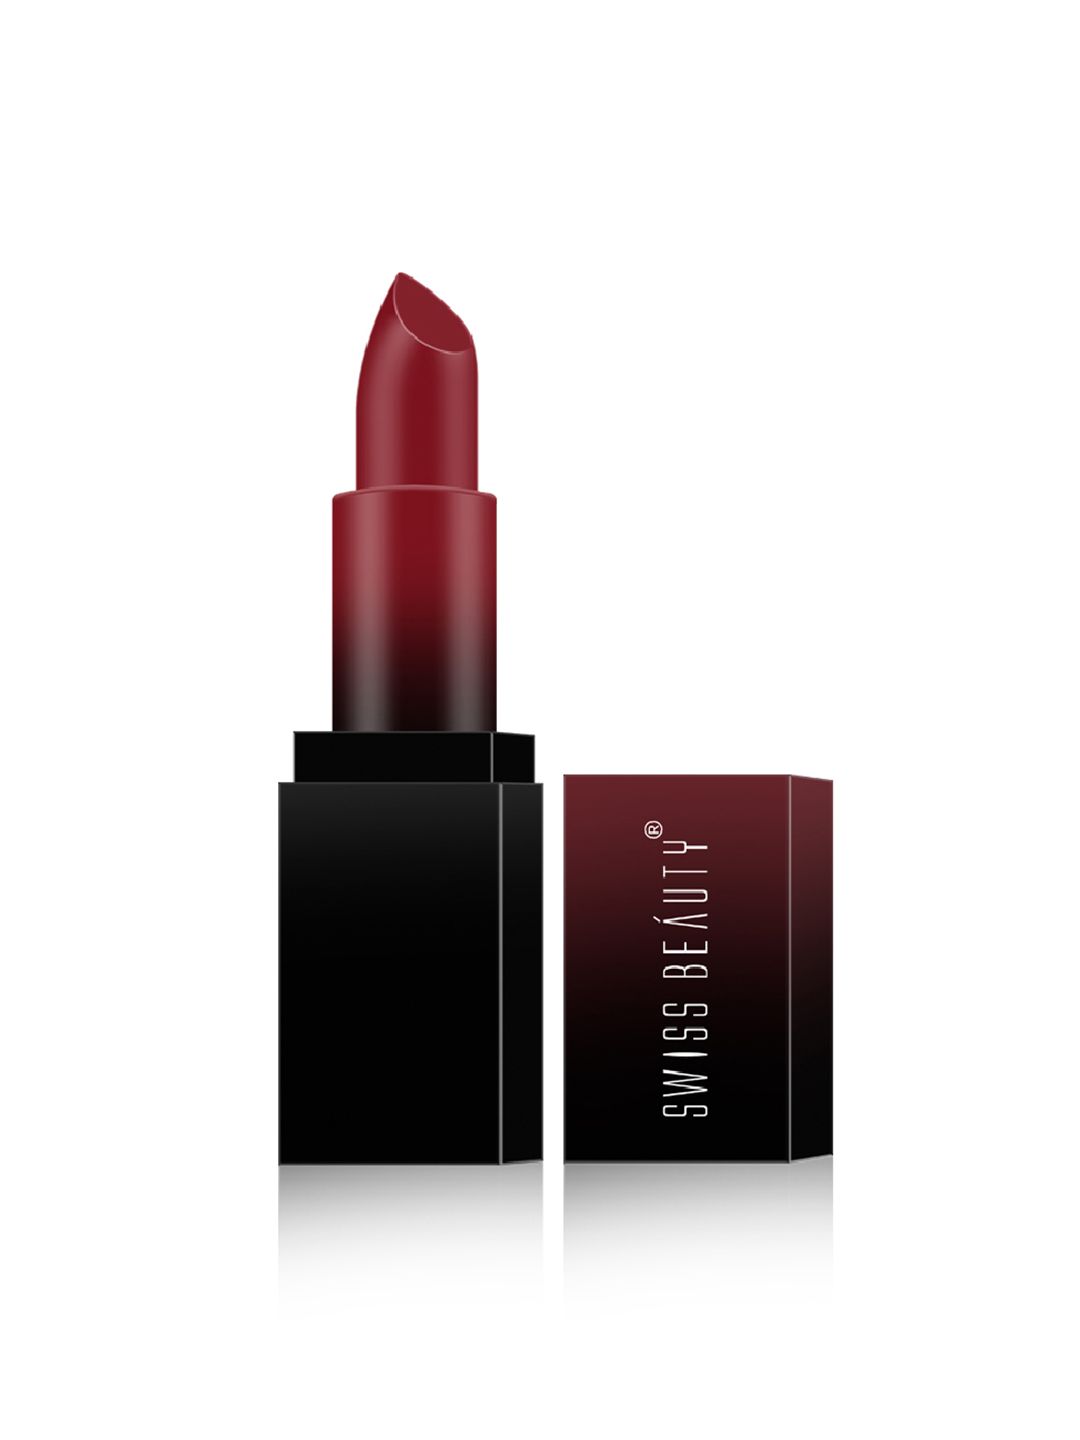 SWISS BEAUTY HD Matte Lipstick - Hot Cherry 04 Price in India